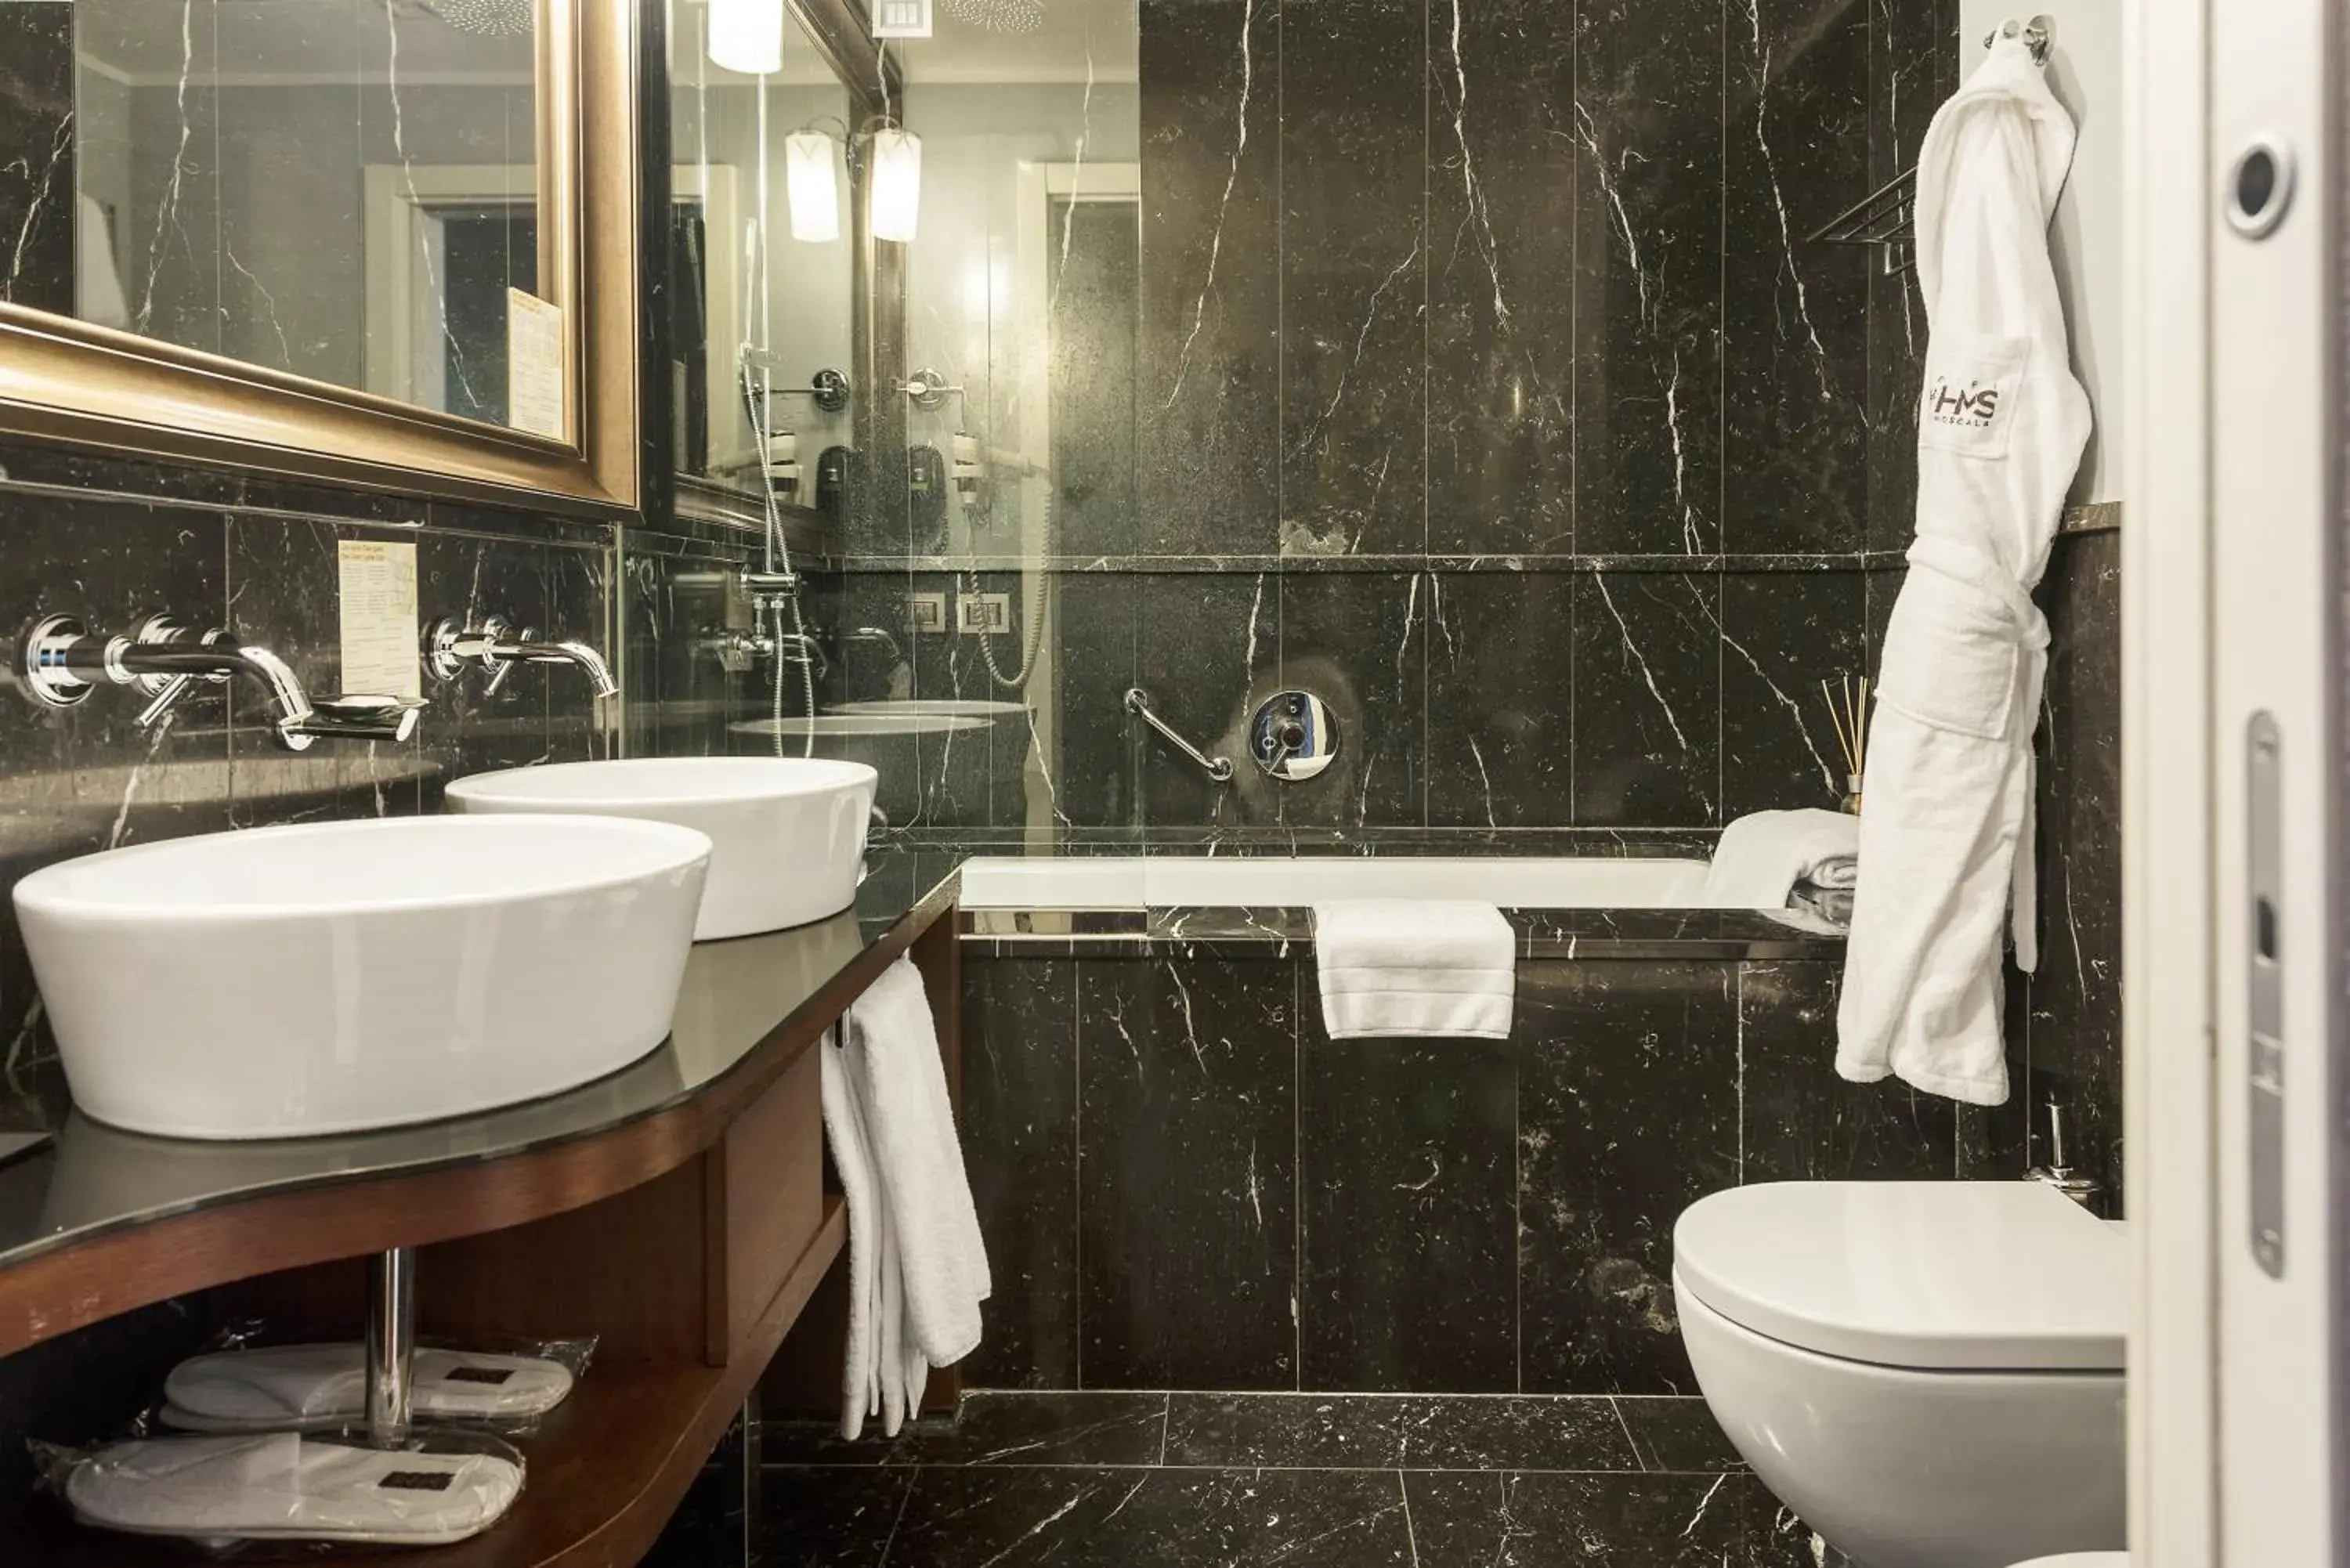 Bathroom in Hotel Milano Scala